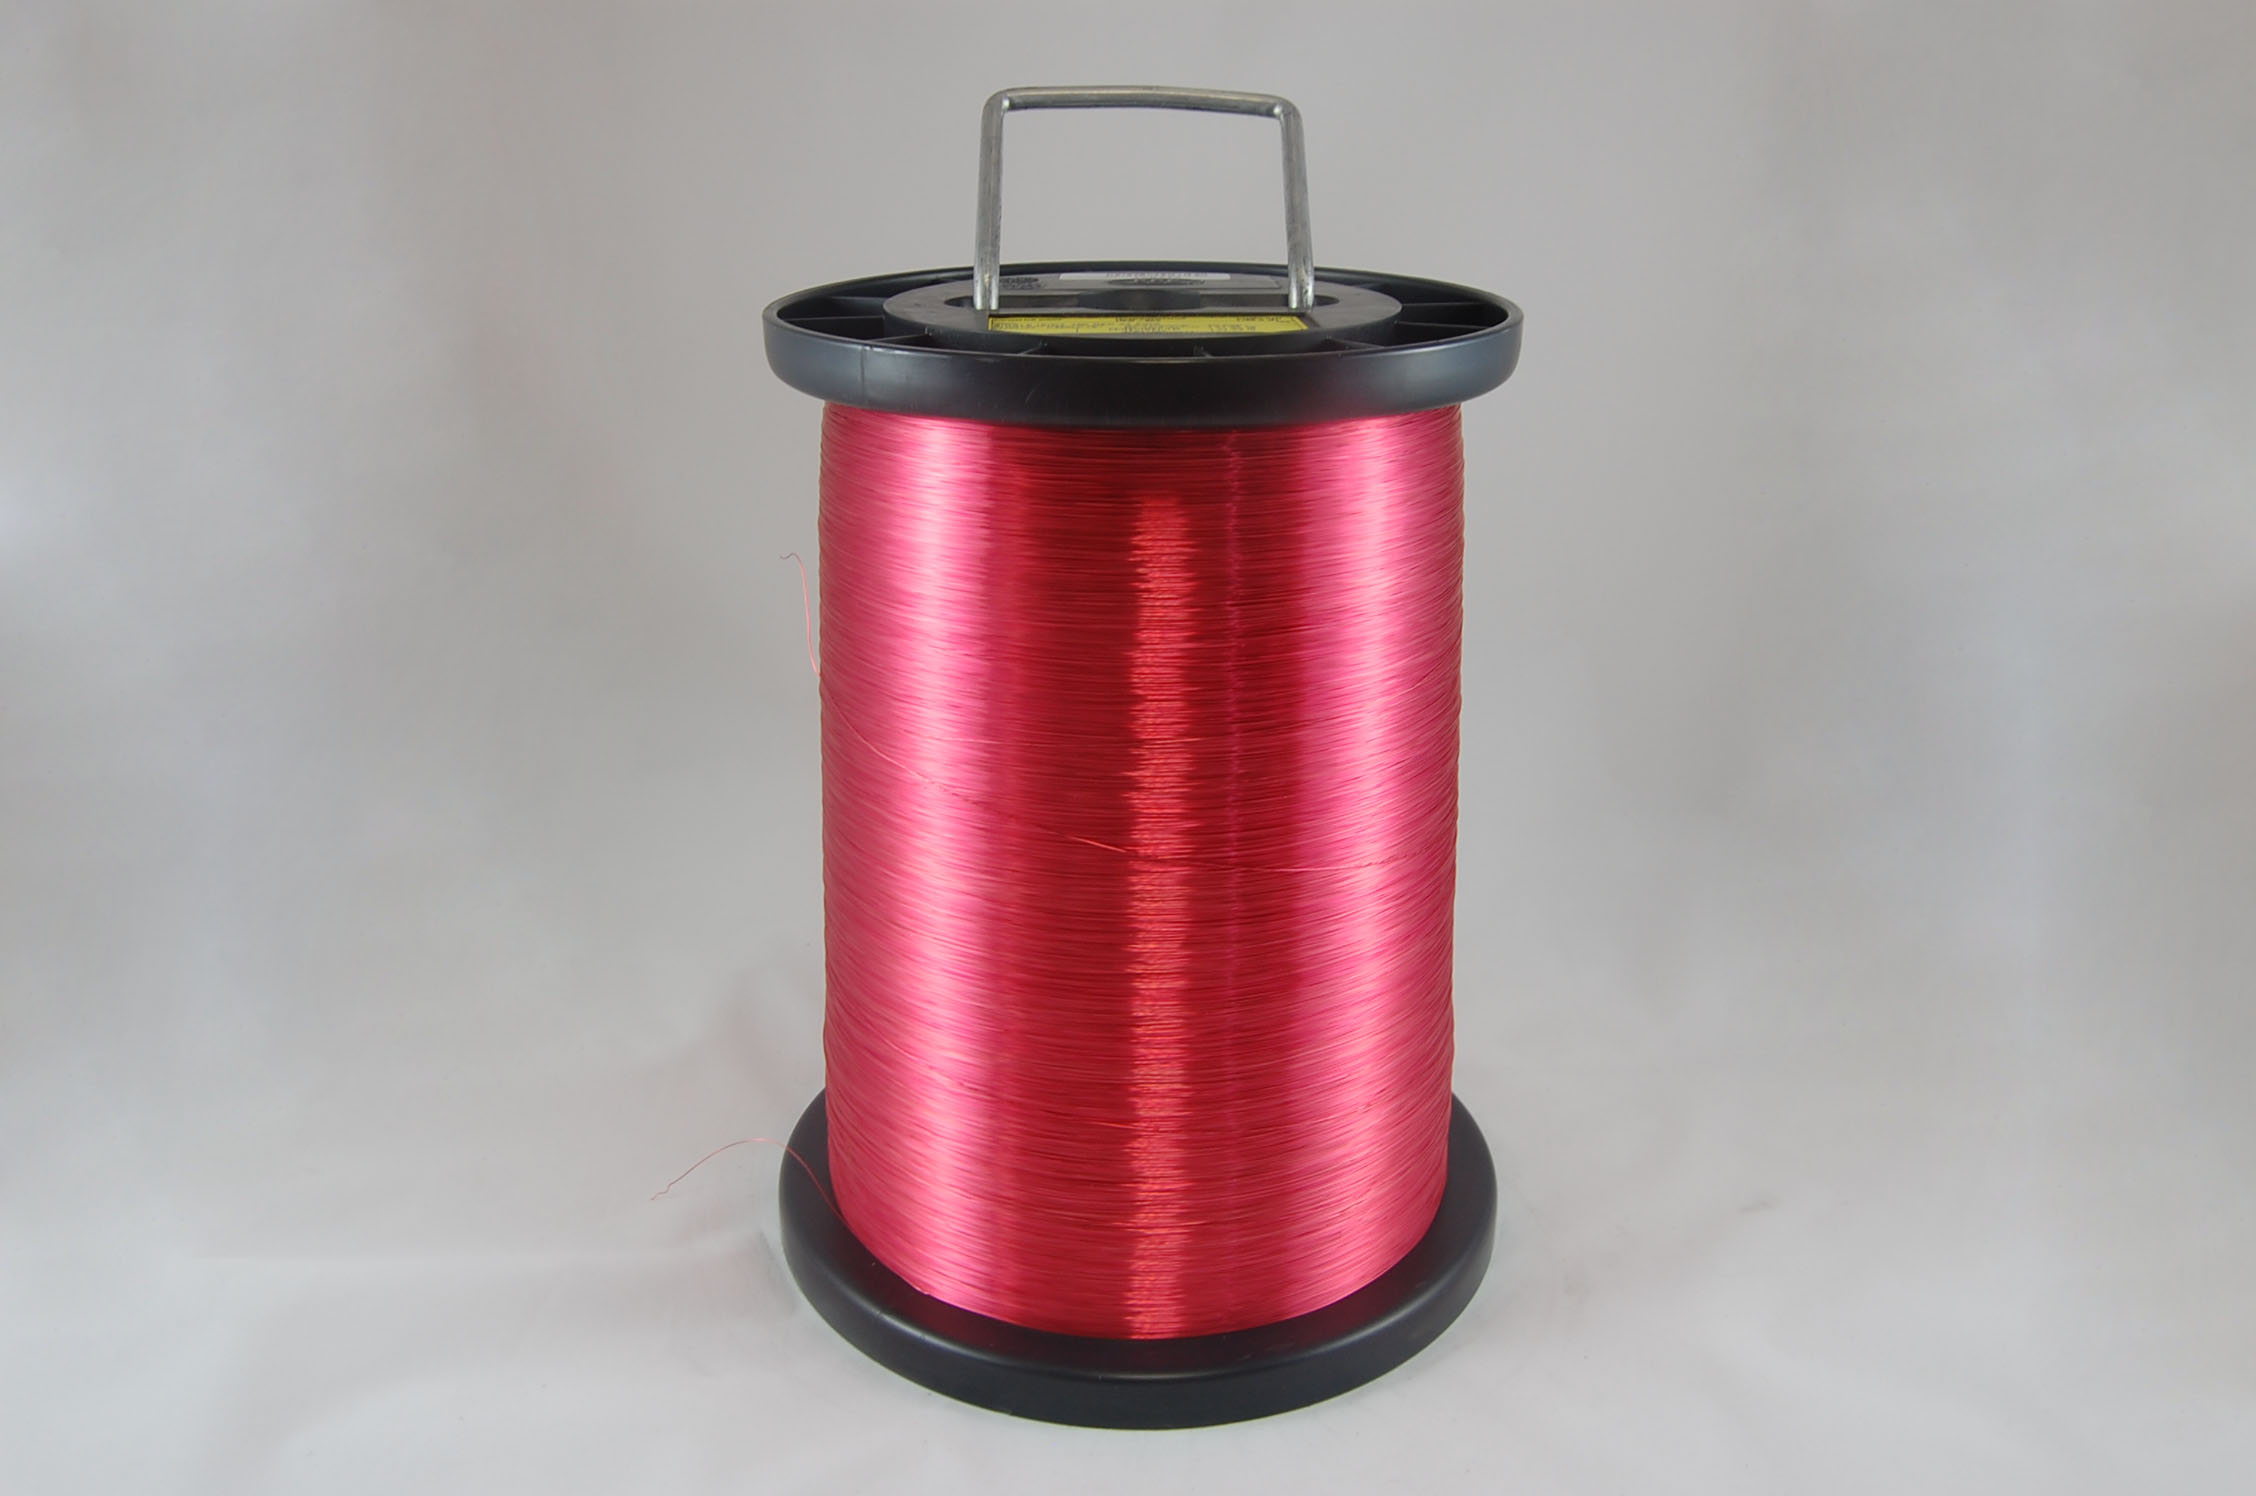 #16.5 Heavy INVEMID 200 Round MW 35 Copper Magnet Wire 200°C, copper, 45 LB half pack pail (average wght.)